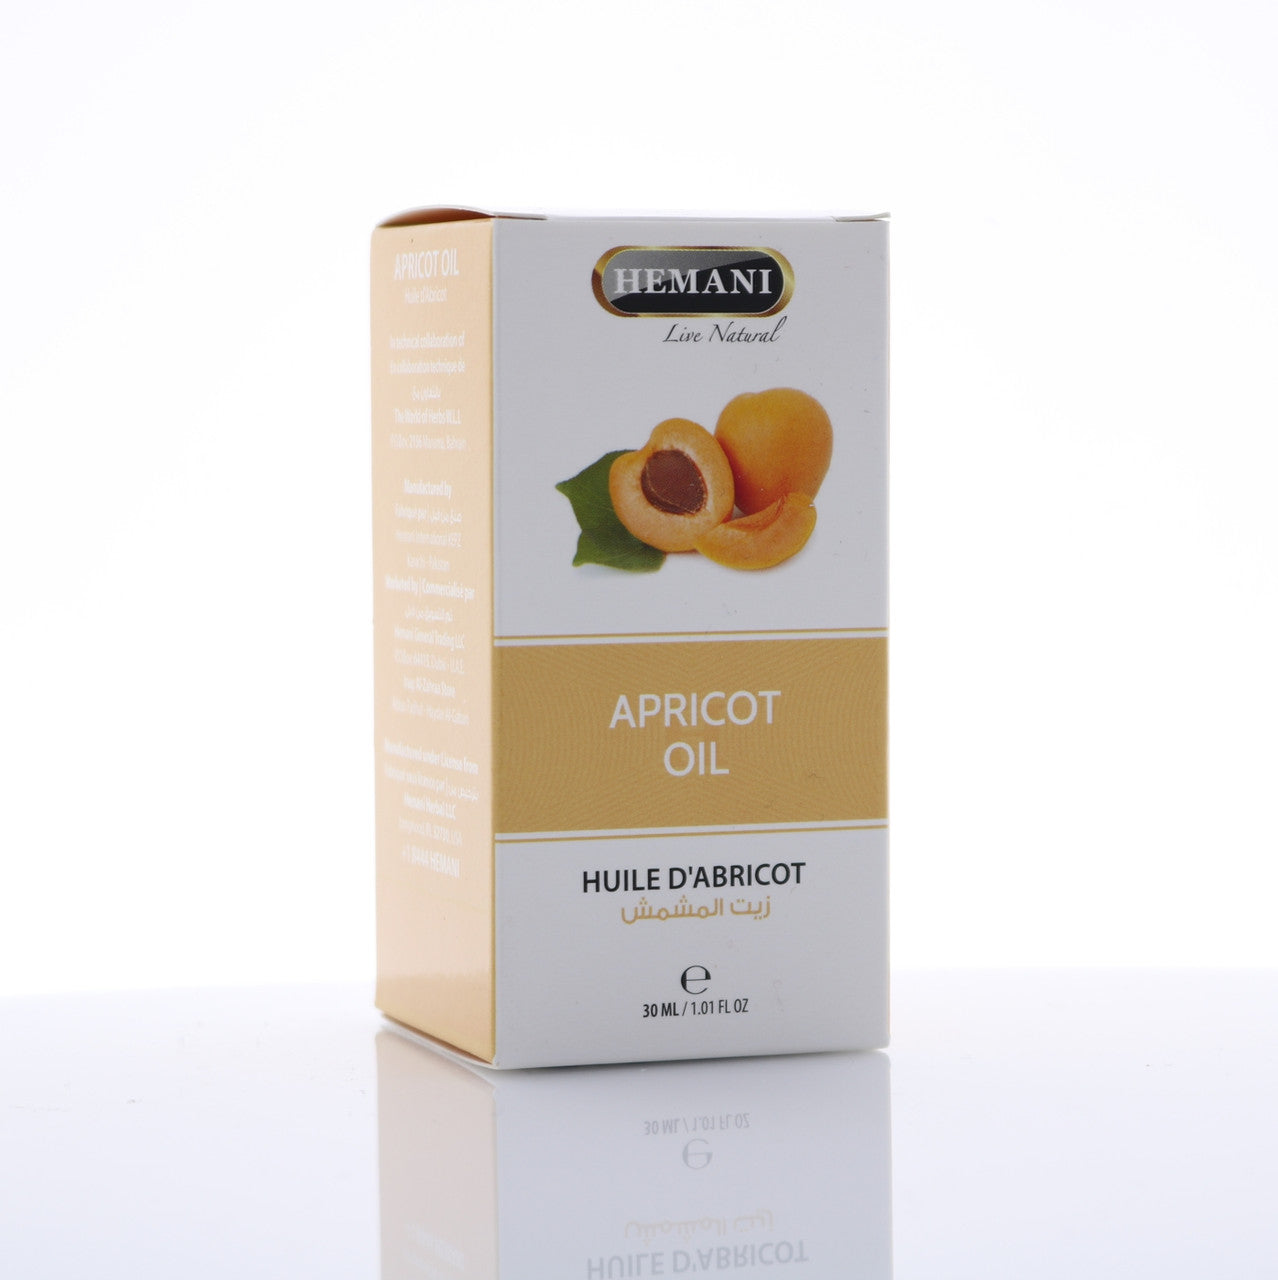 Hemani Apricot Oil, 30 ml